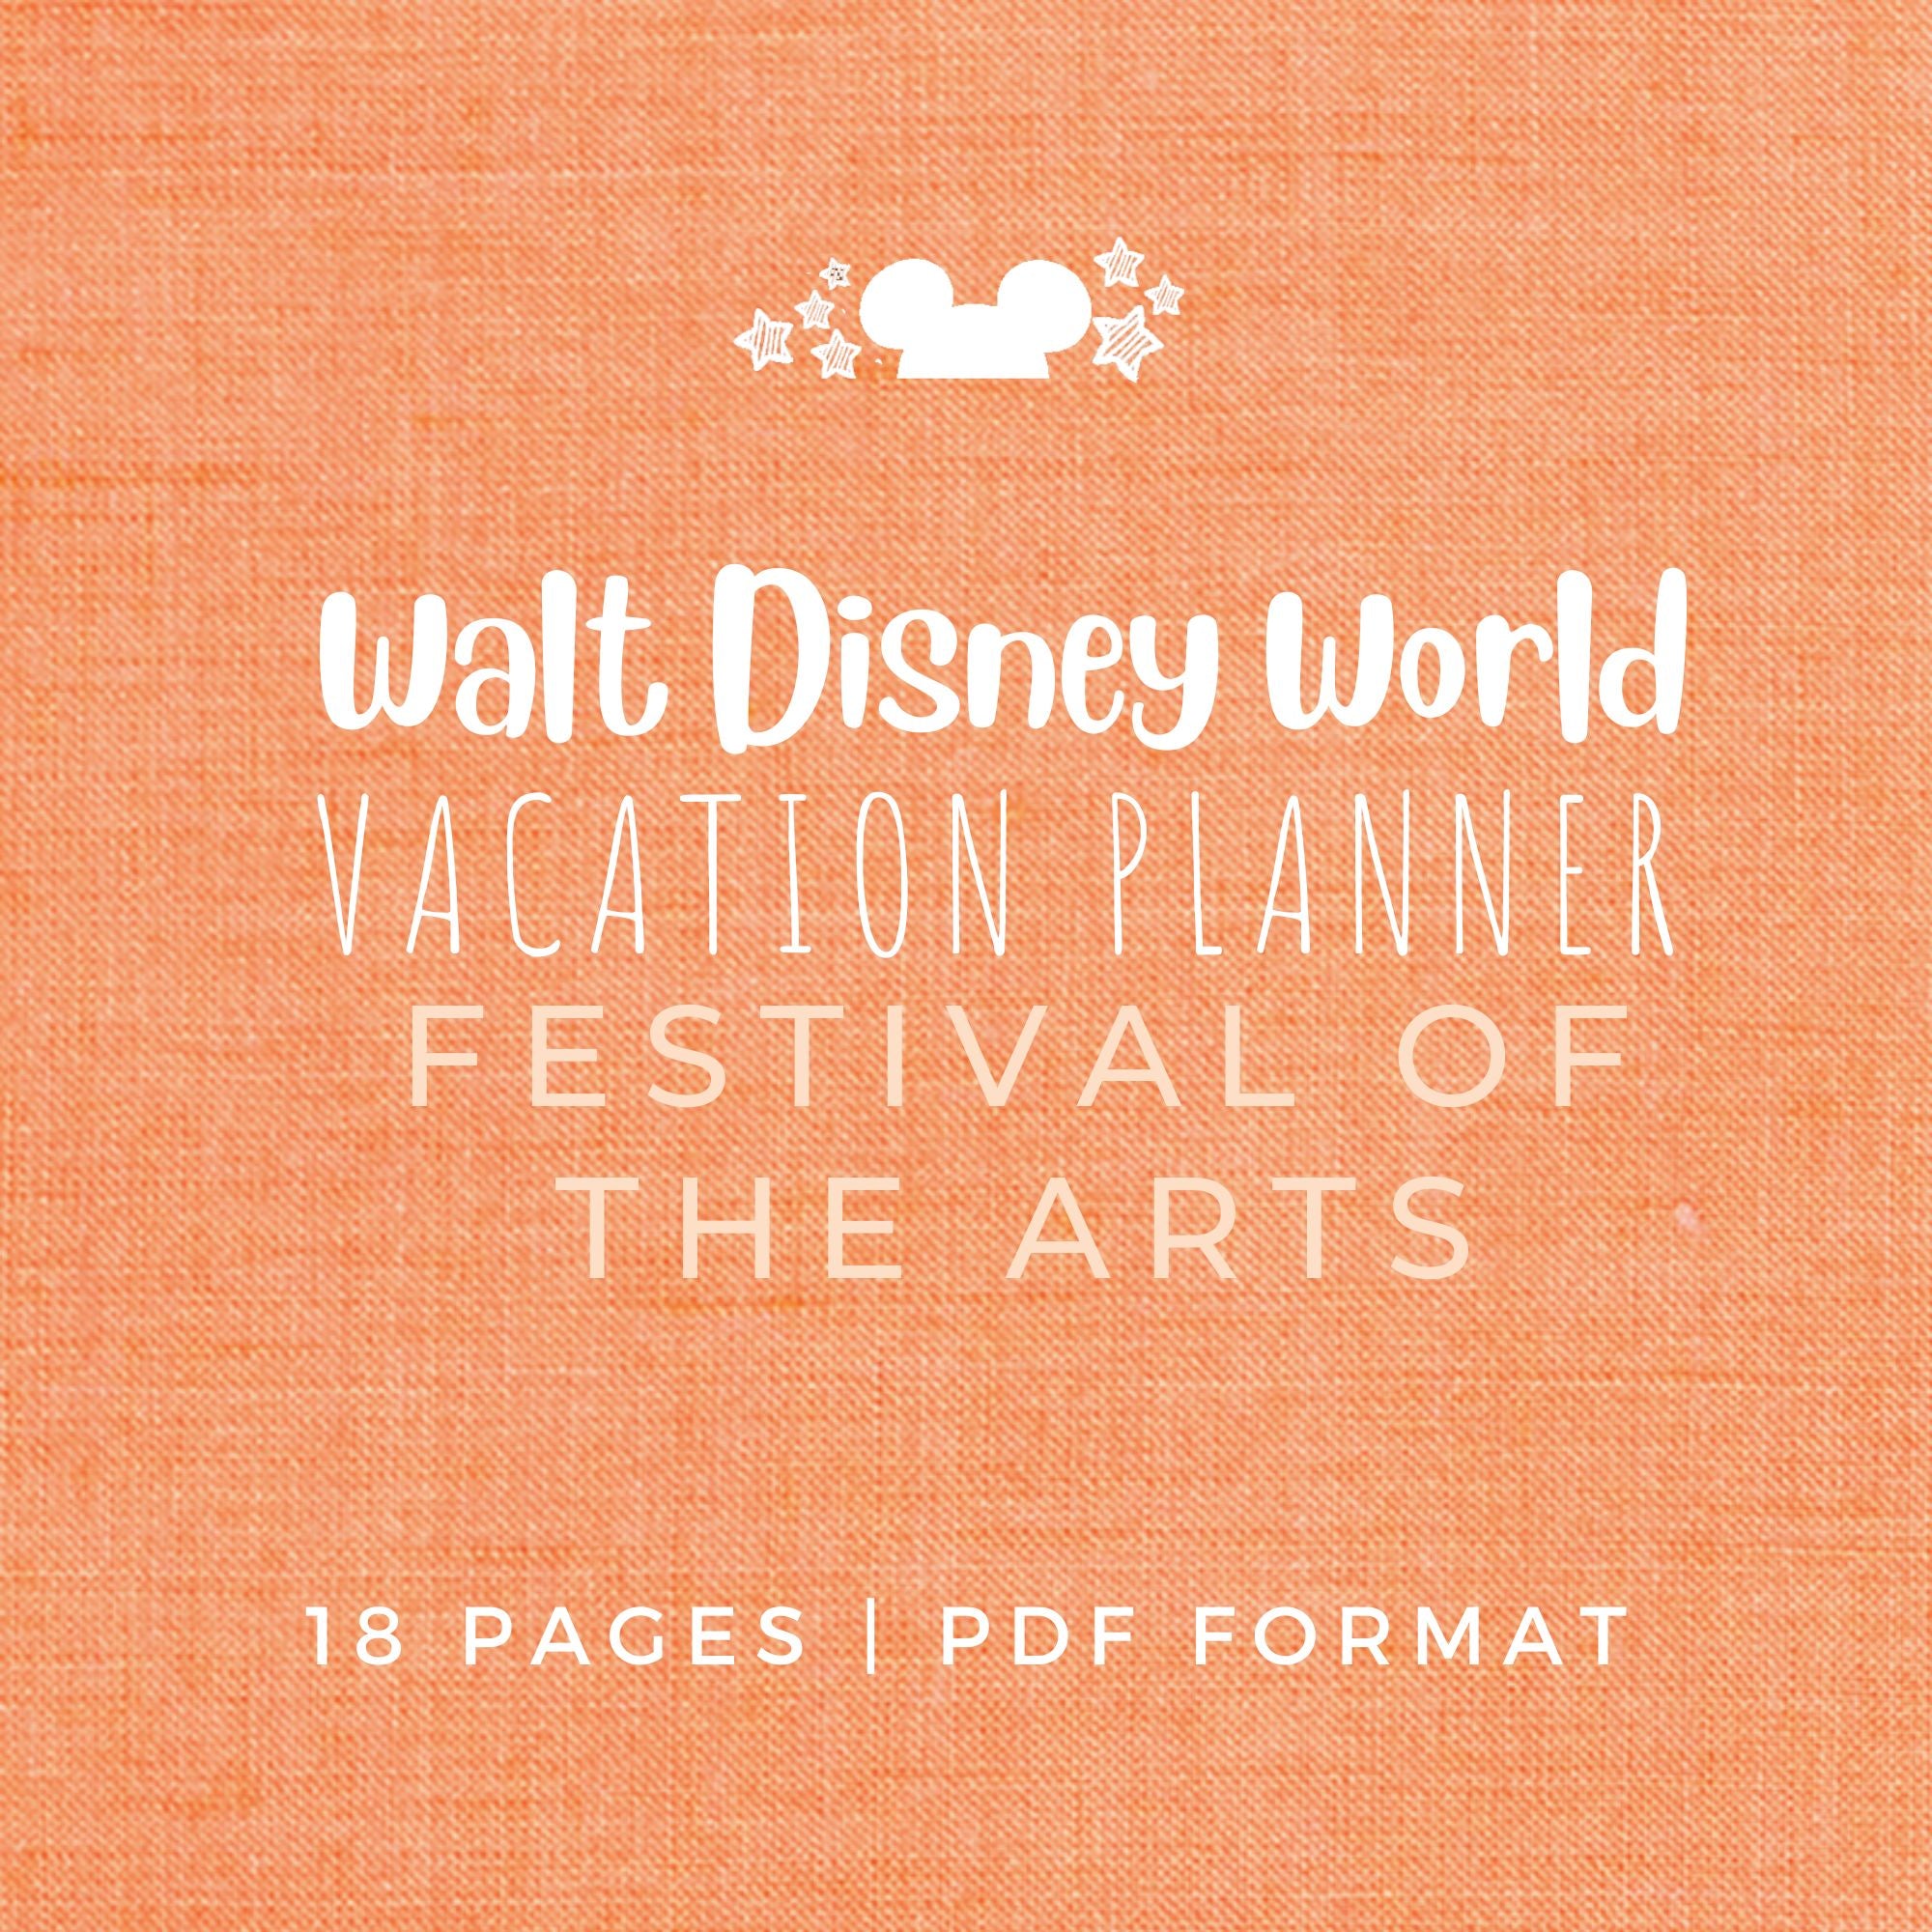 Disney Planner FESTIVAL OF THE ARTS Disney Vacation Planner Printable